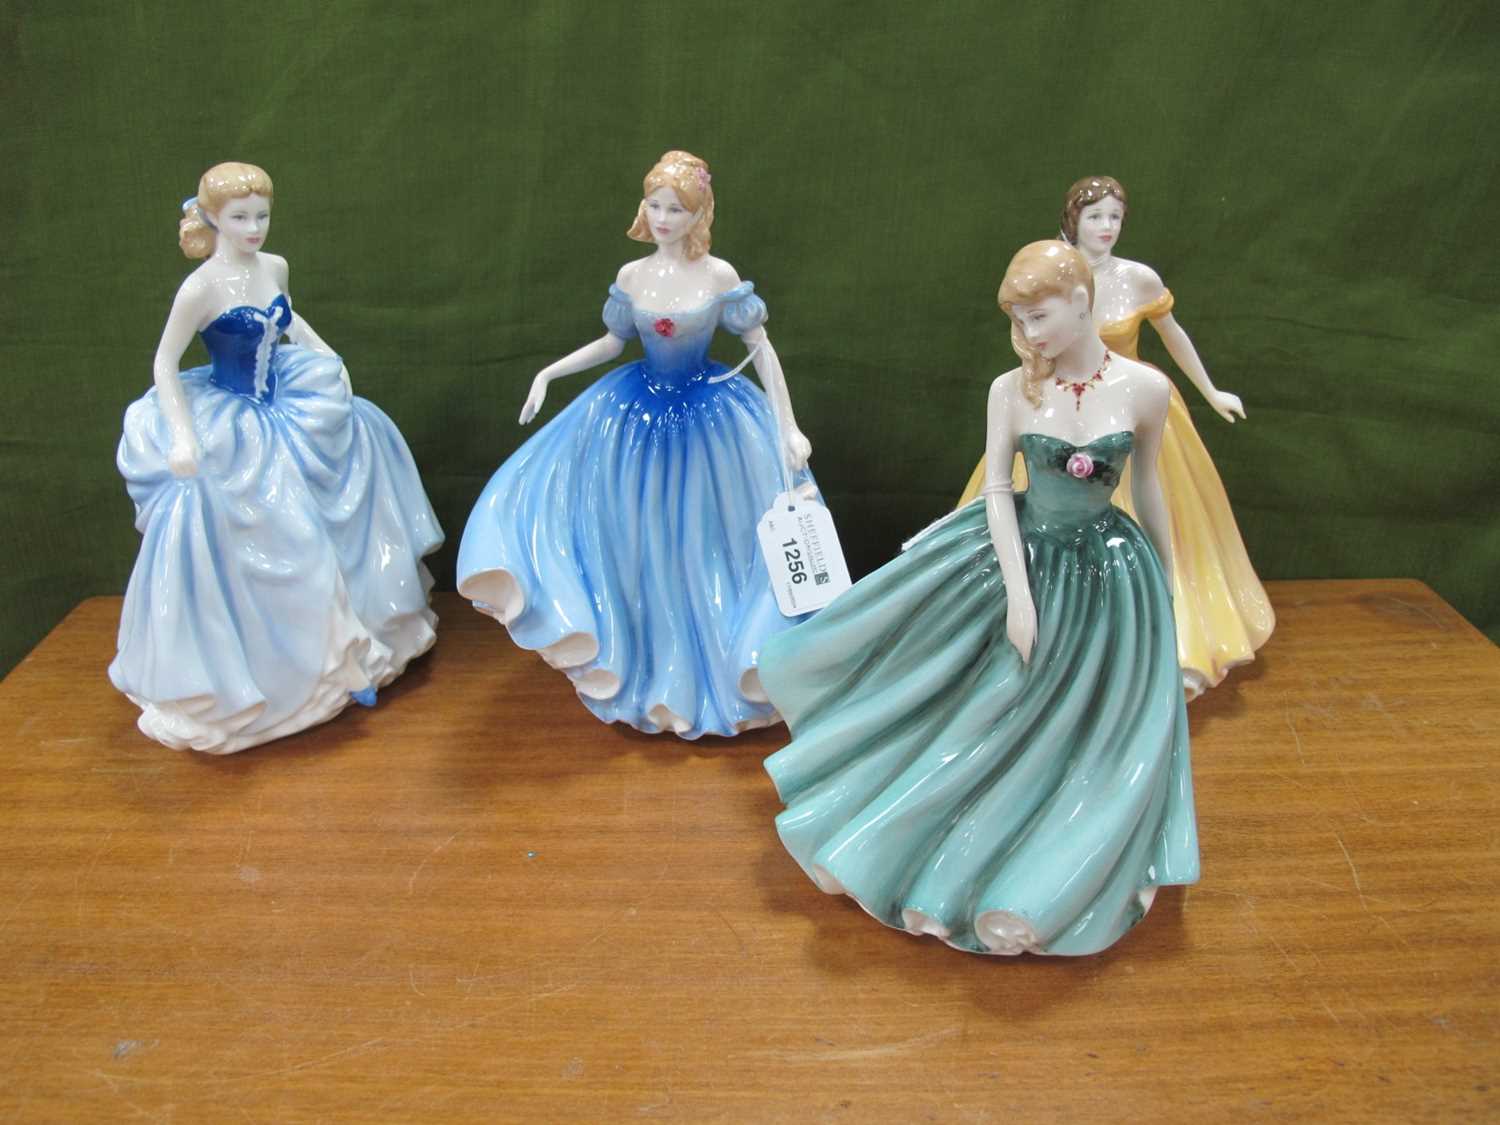 Royal Doulton Classics Figurines 'Susan', 22.5cm high, 'Melissa', 'Elizabeth' and 'Sarah', each with